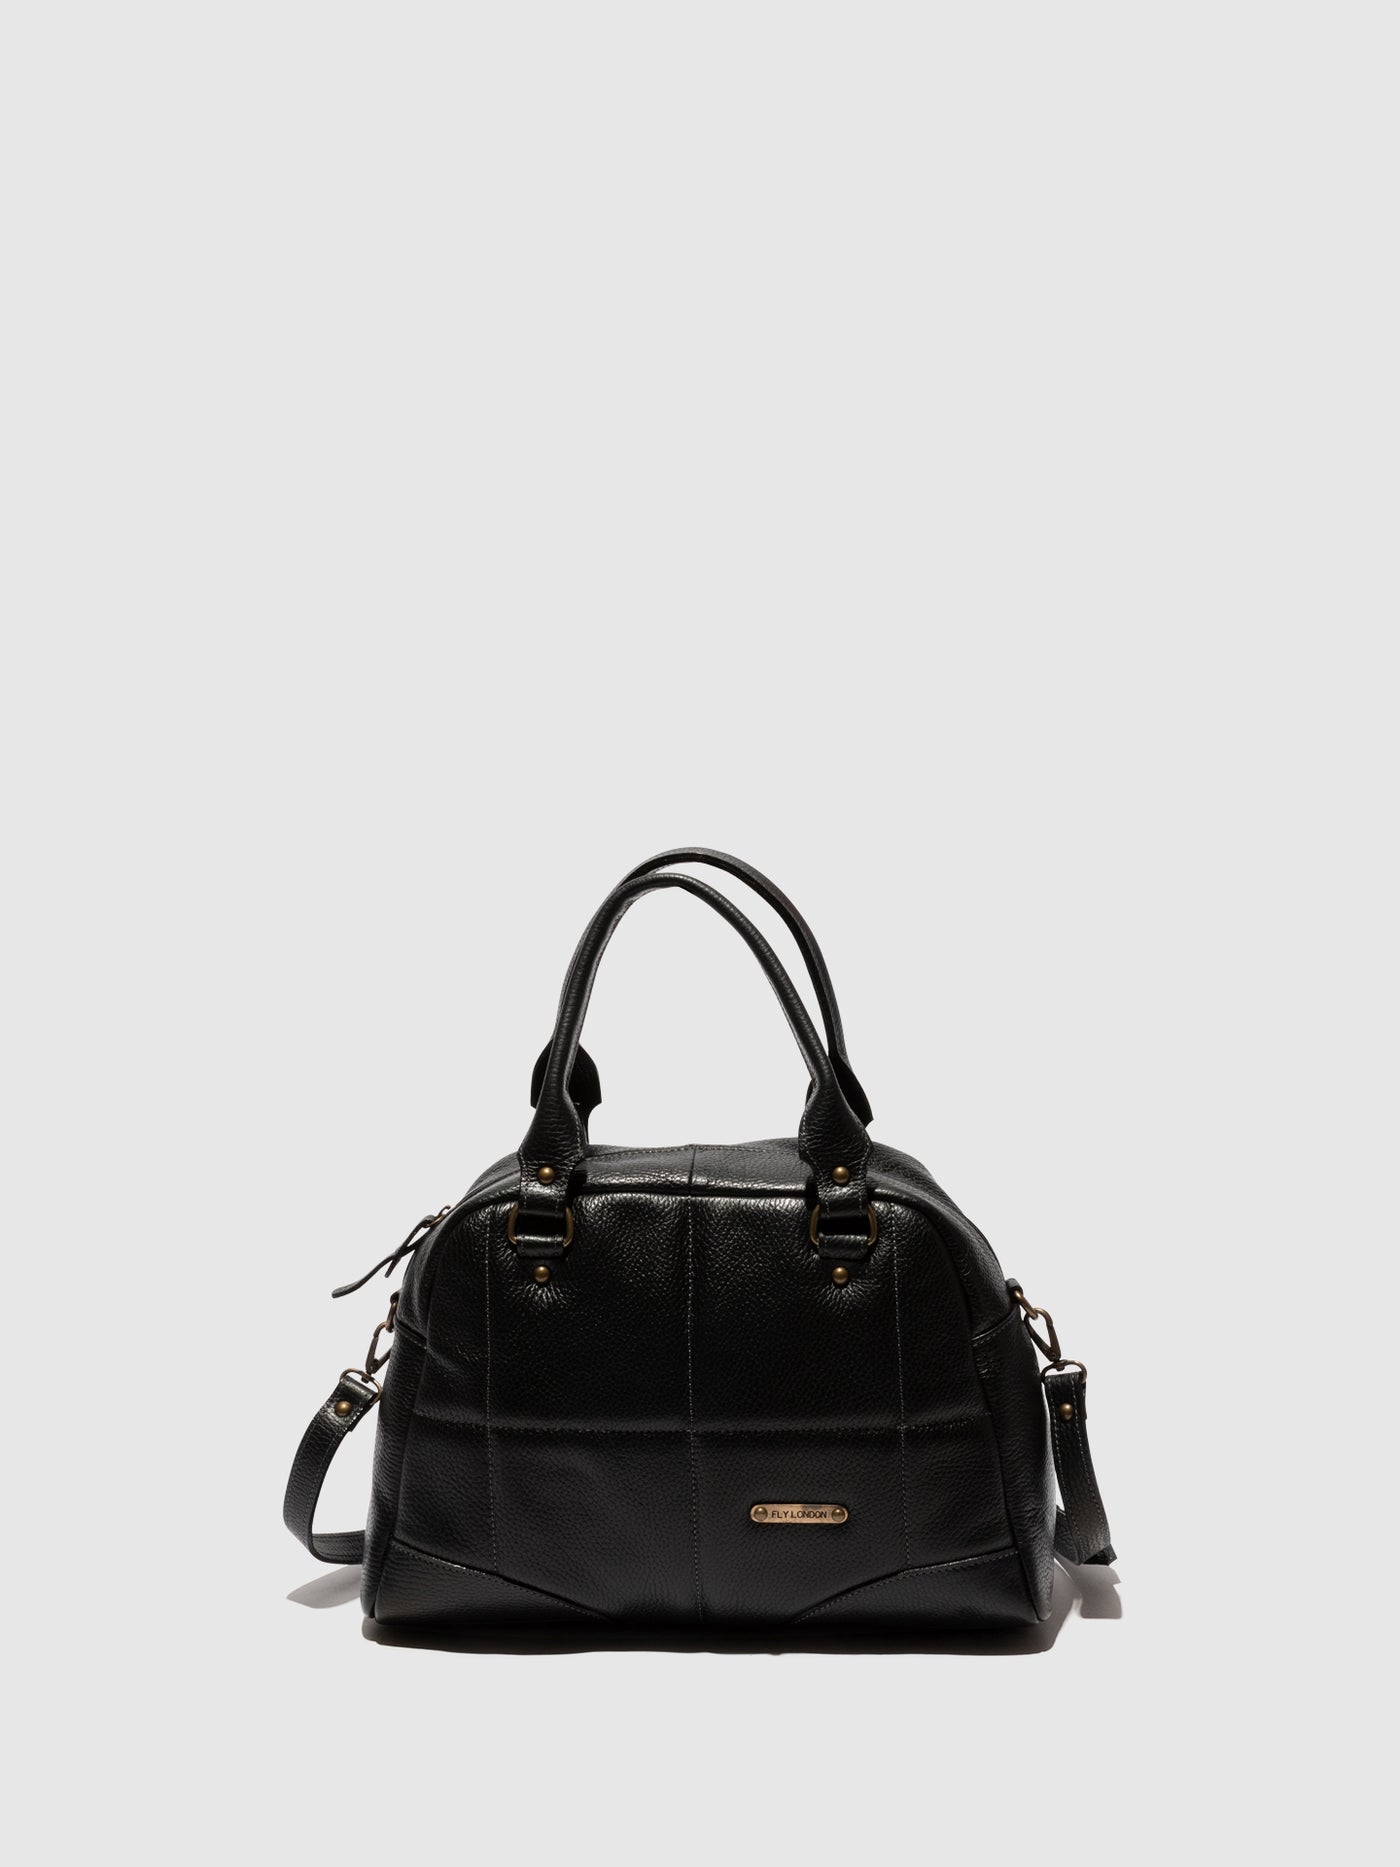 Handbag Bags EGOS743FLY BLACK